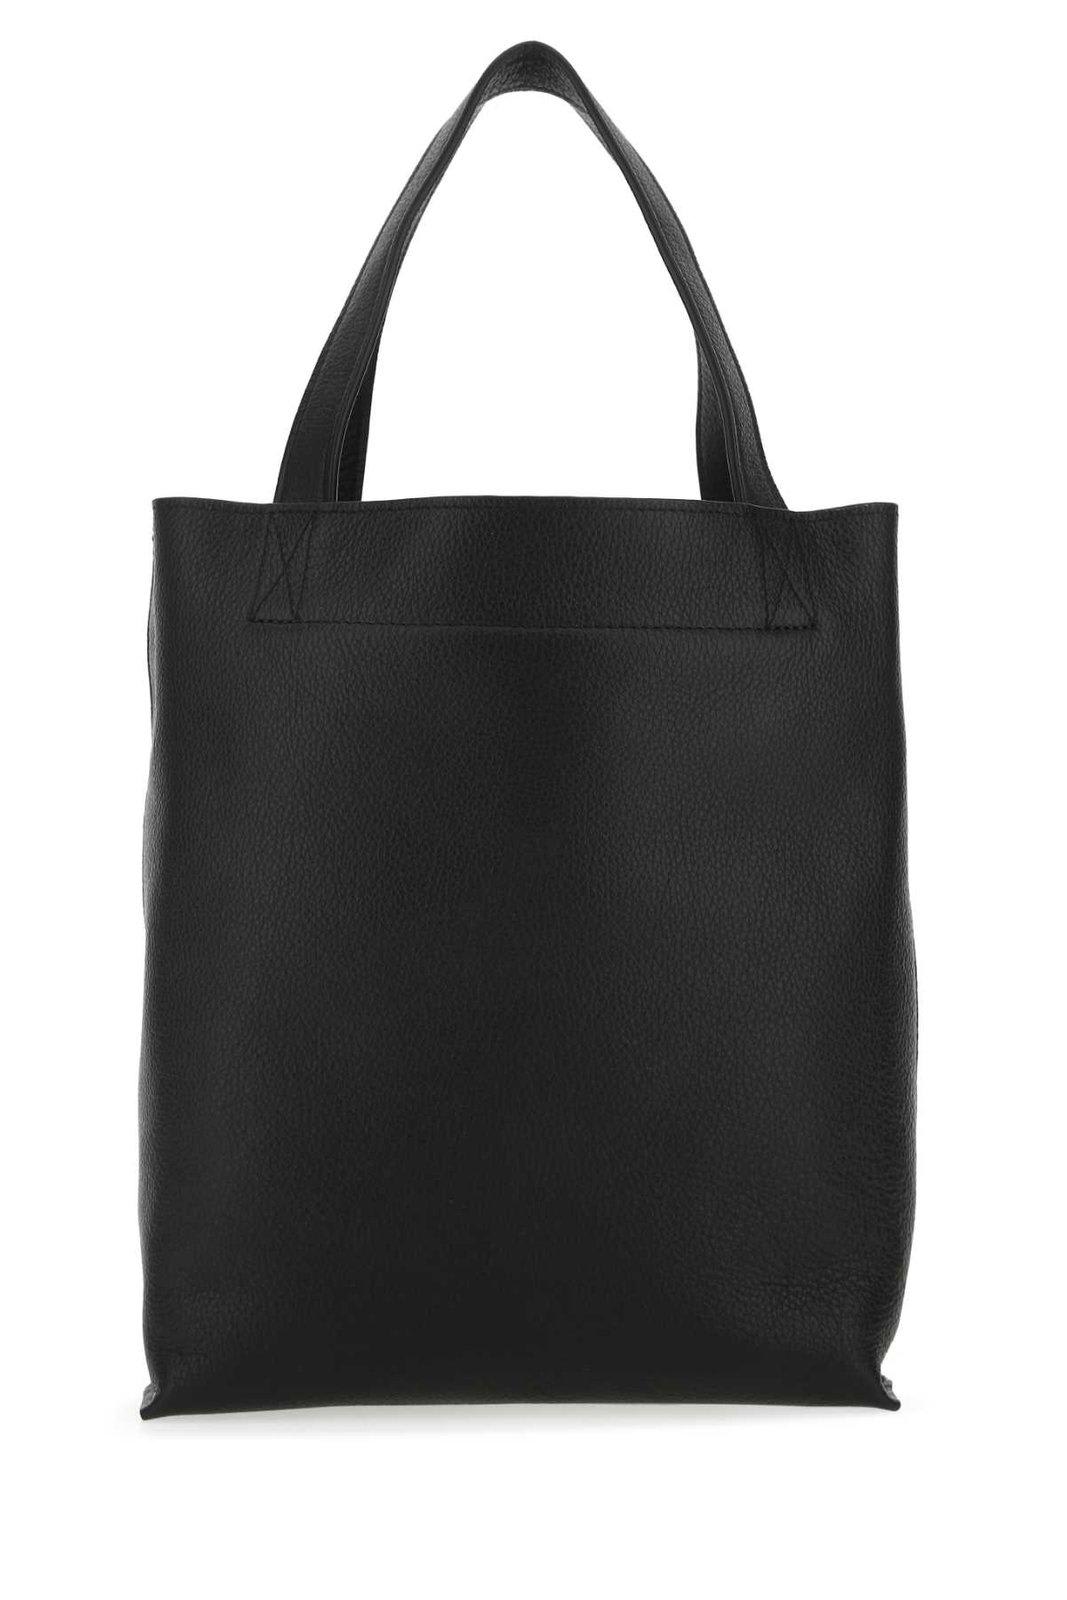 Shop Apc Cabas Maiko Tote Bag In Lzz Black